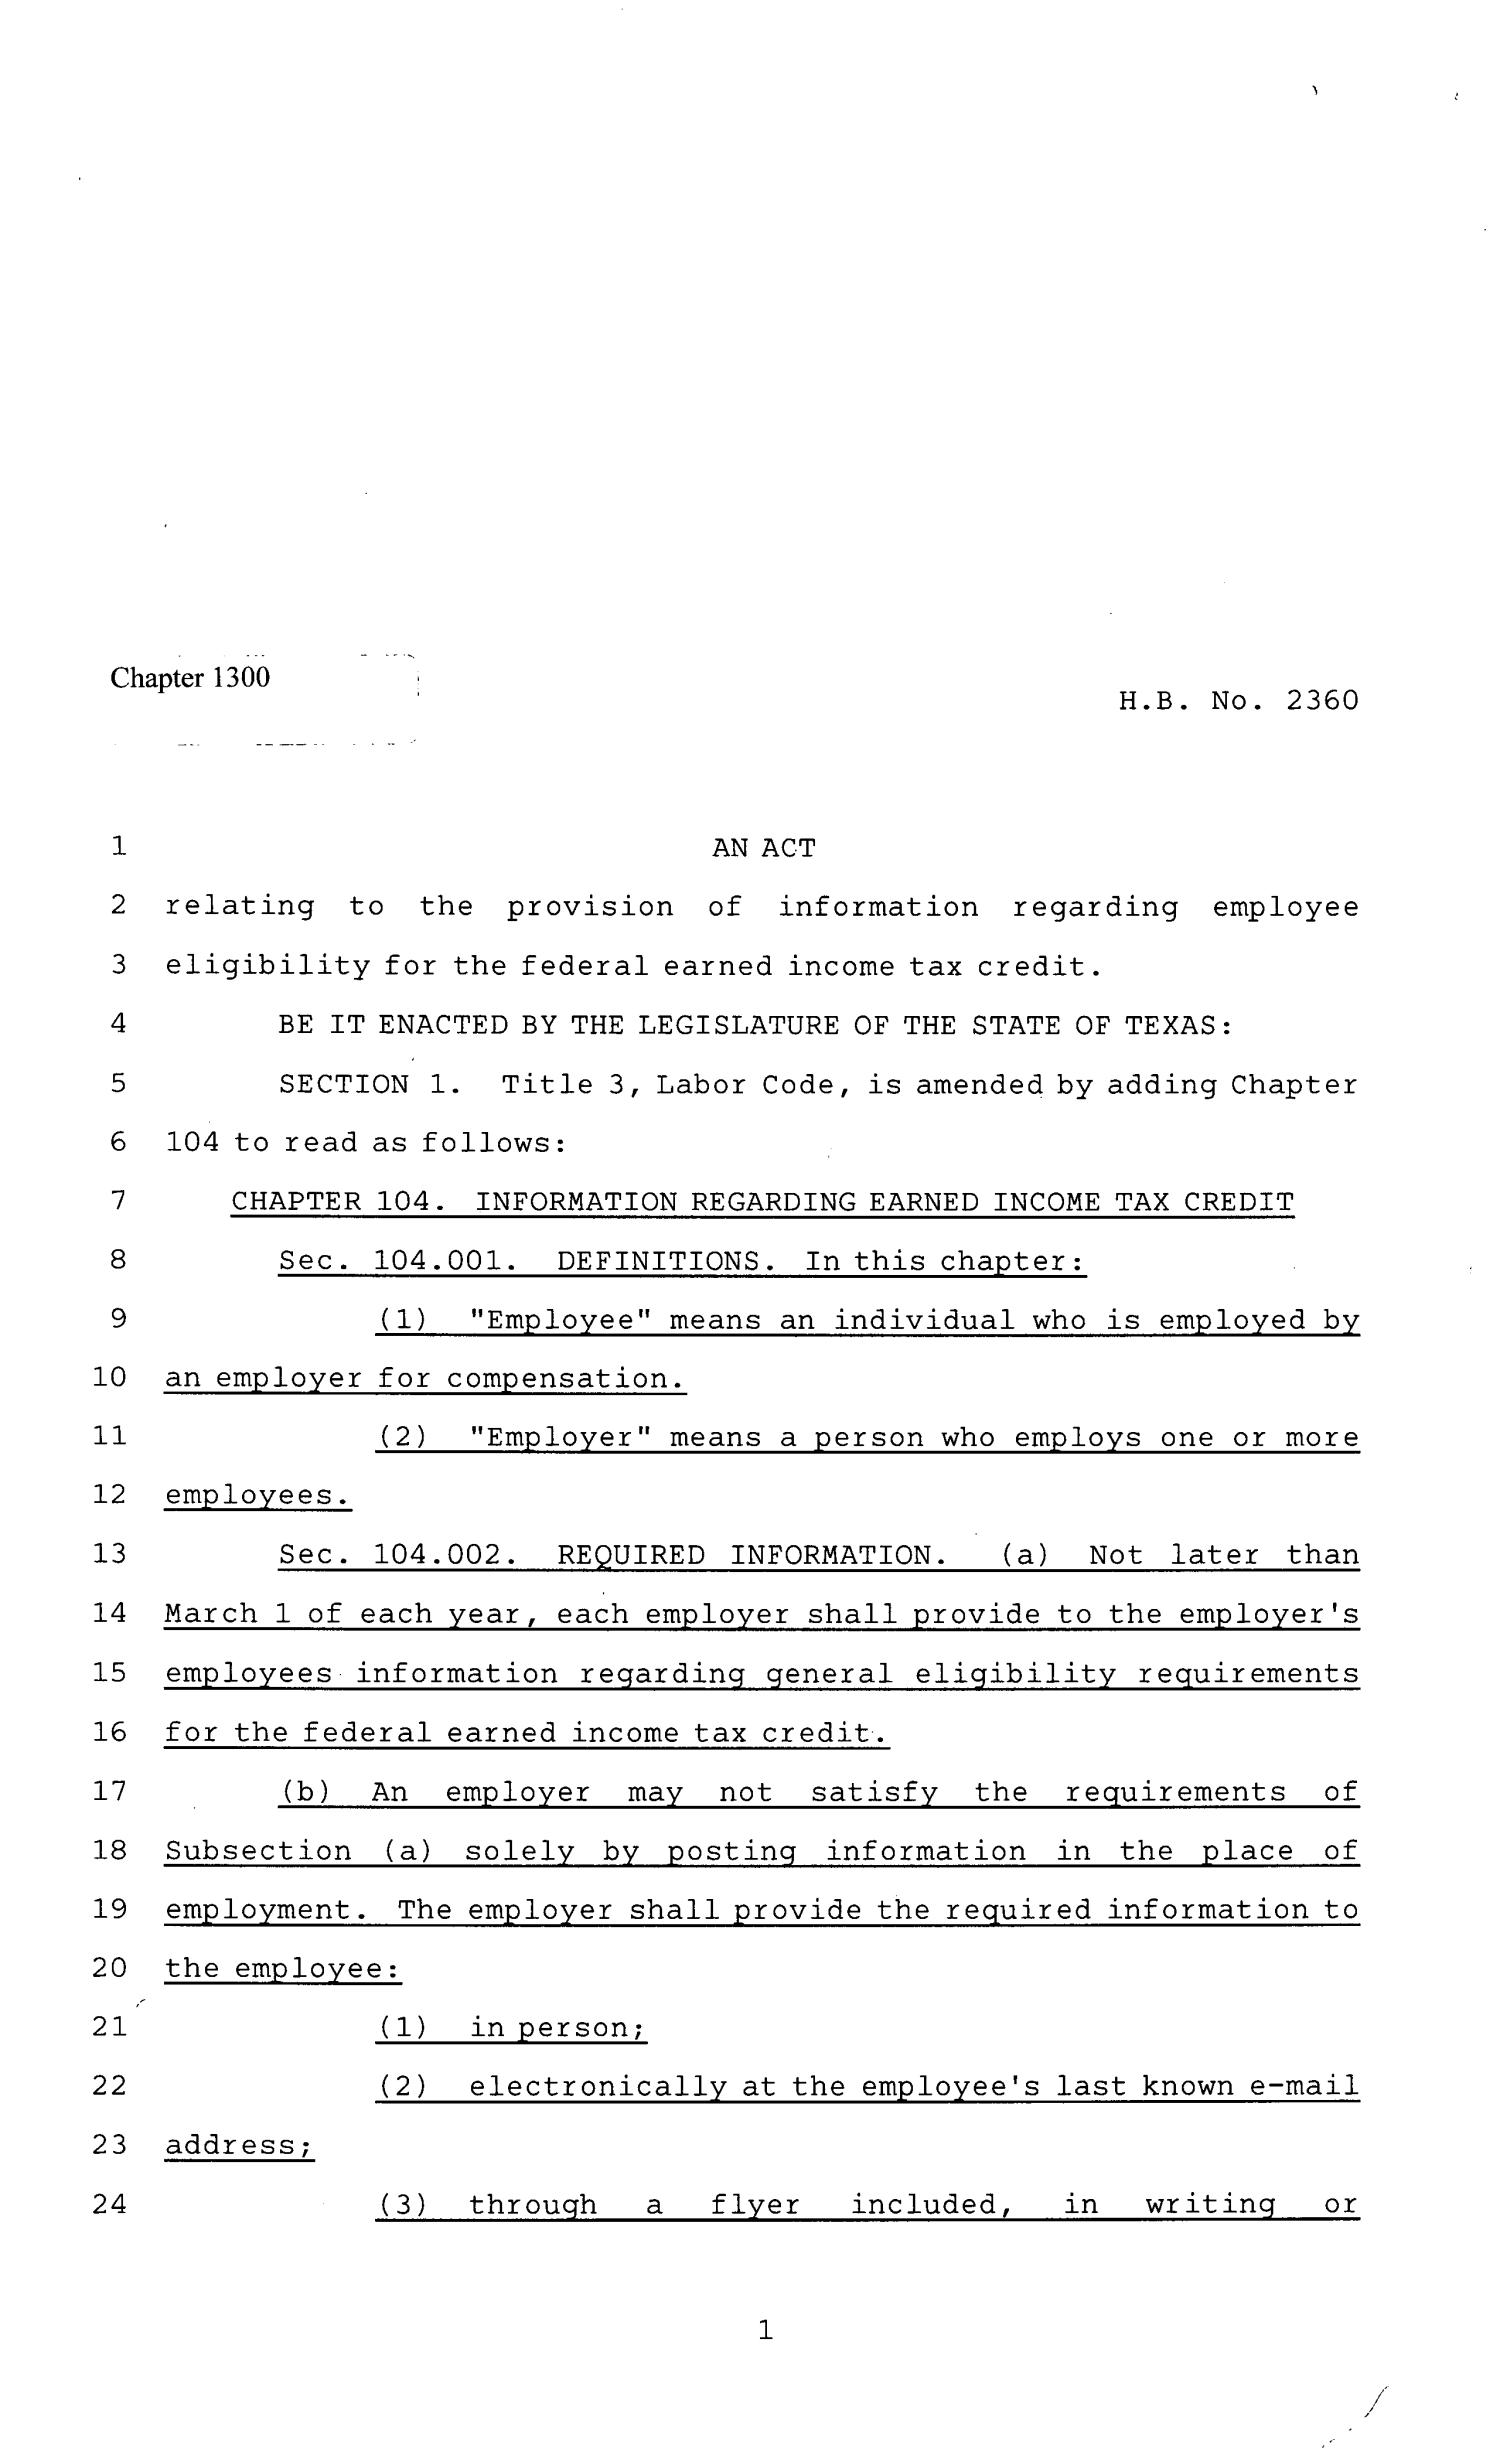 81st Texas Legislature, Regular Session, House Bill 2360, Chapter 1300